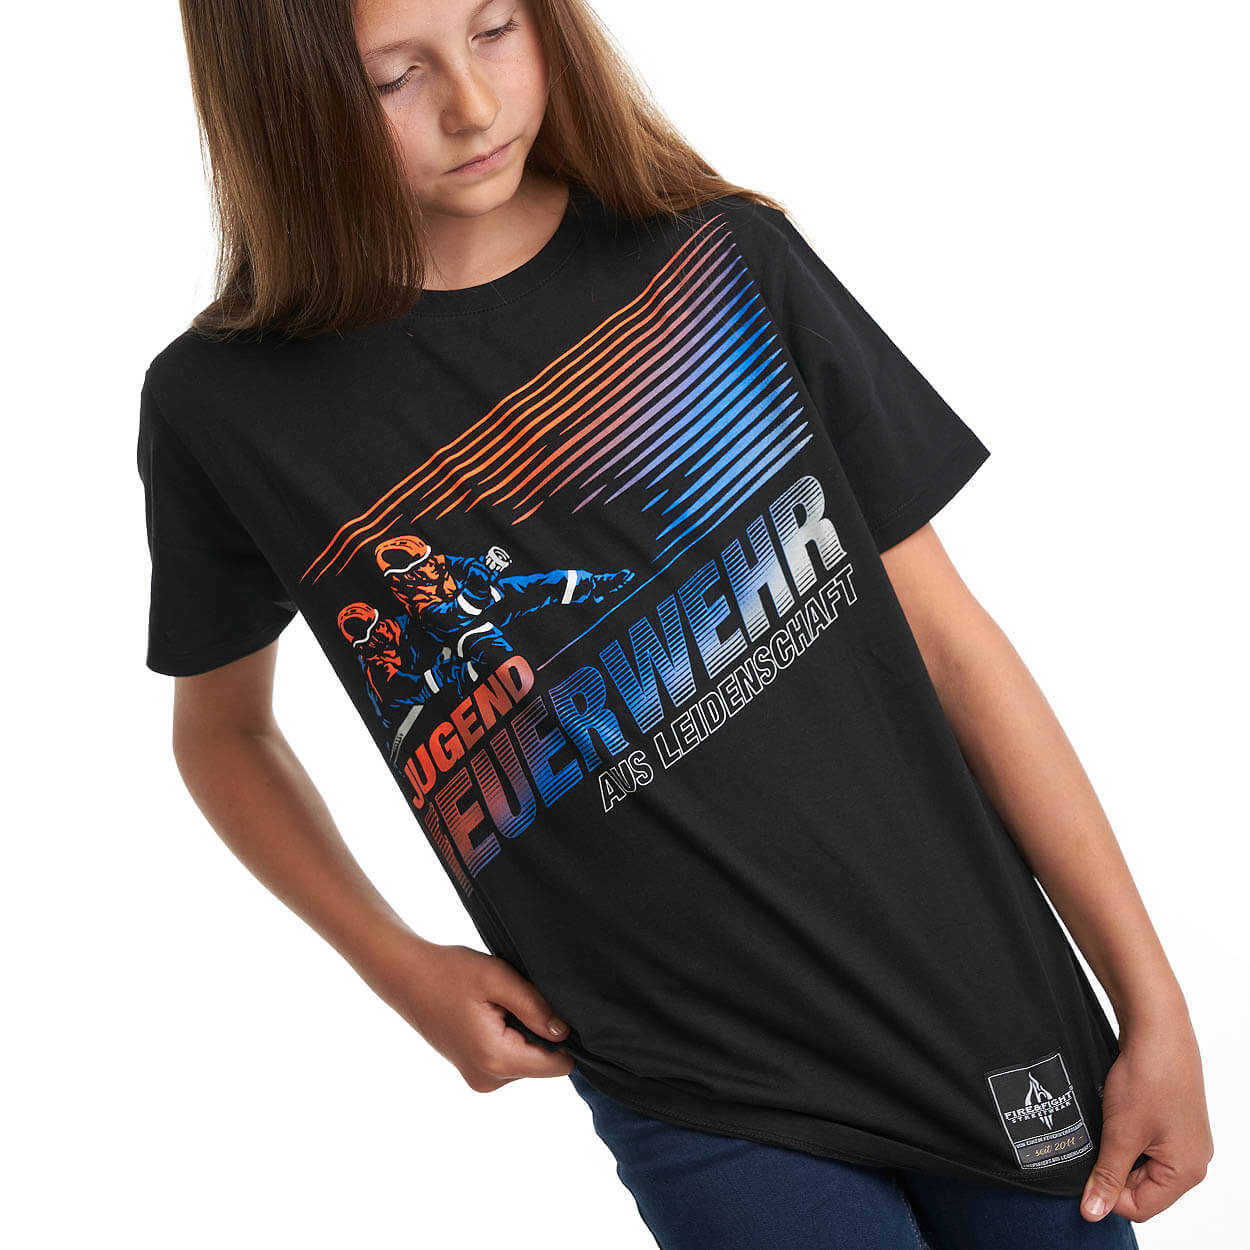 Jugendfeuerwehr aus Leidenschaft - Kinder T-Shirt